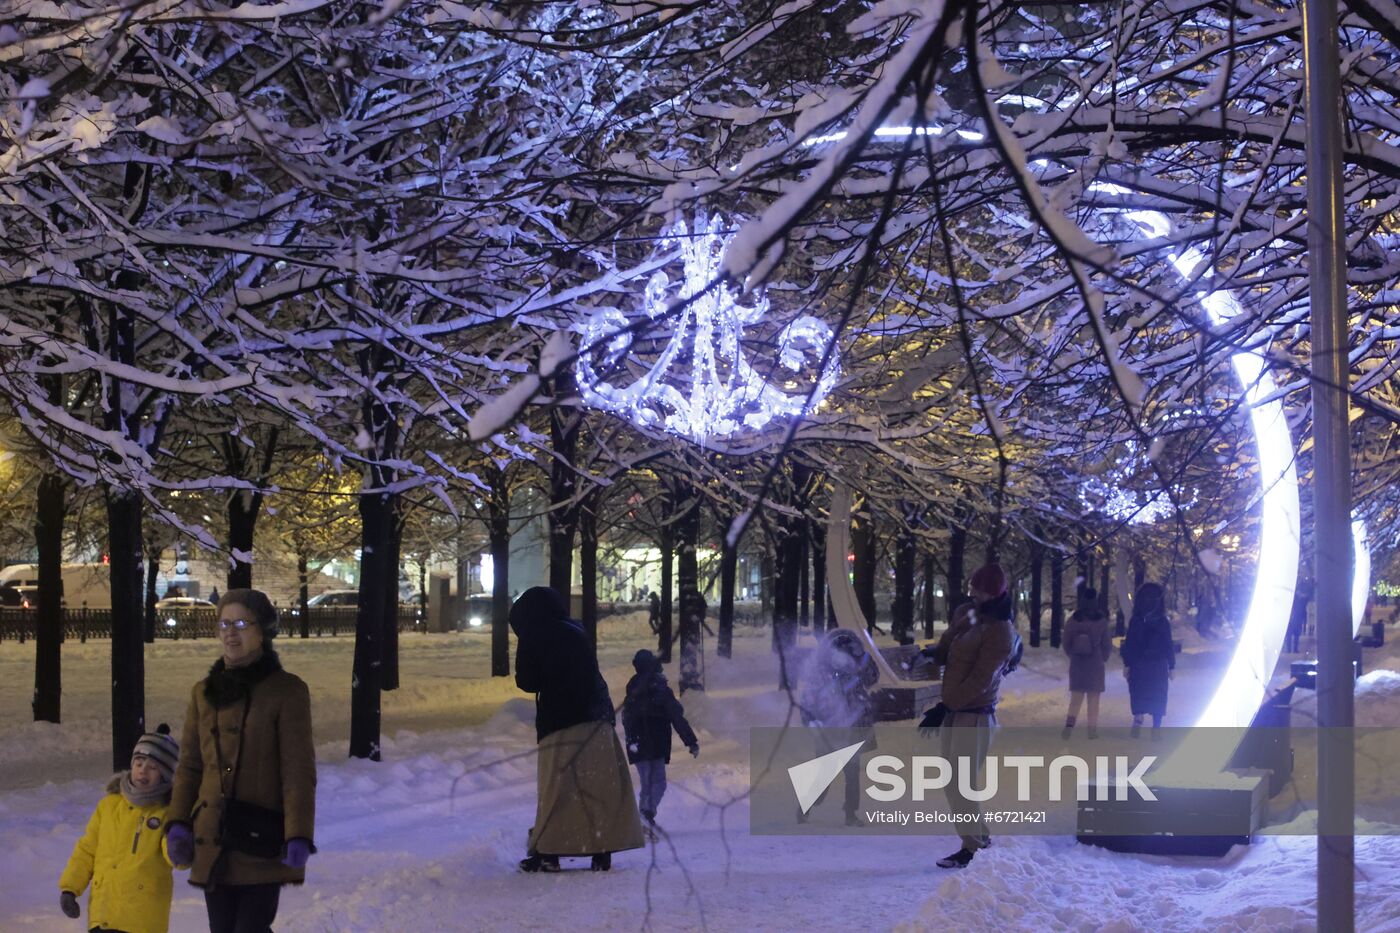 Russia New Year Festive Season Preparations